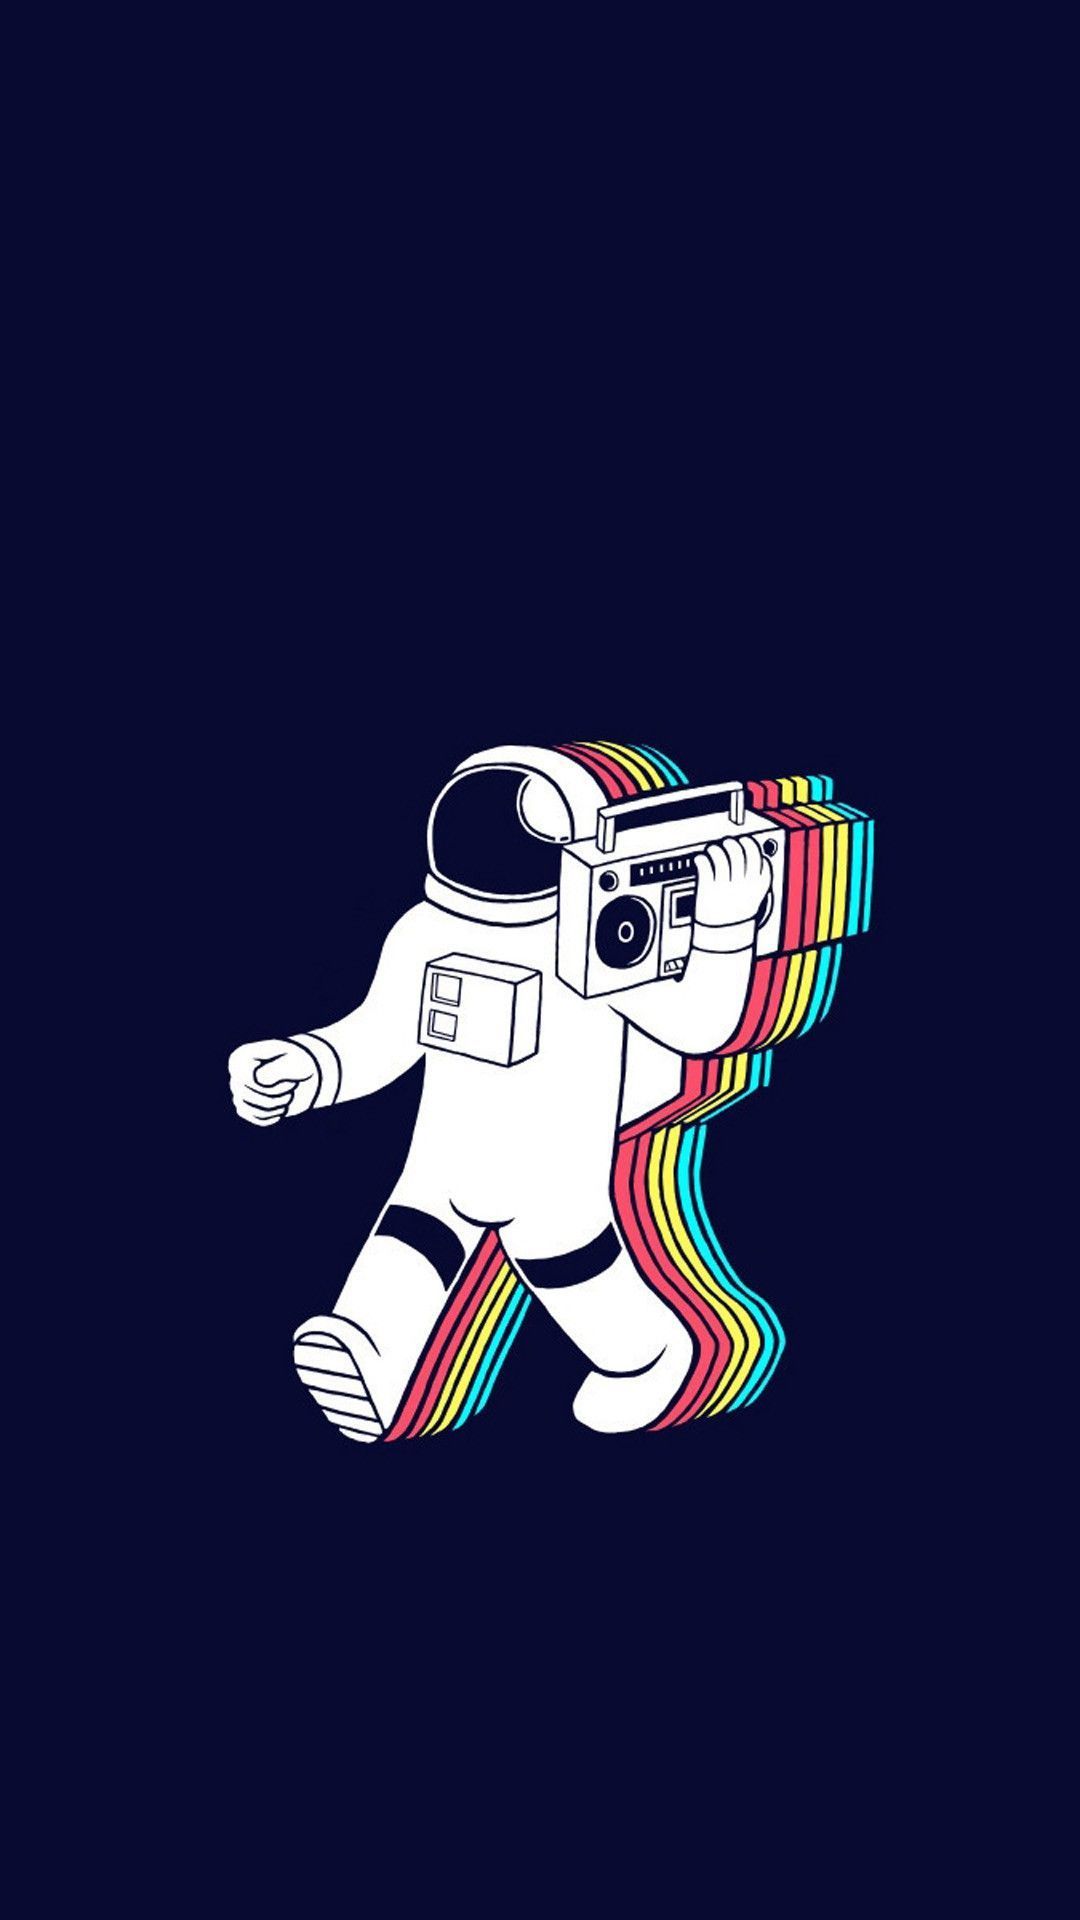 Cartoon Astronaut Music iPhone Wallpaper. file